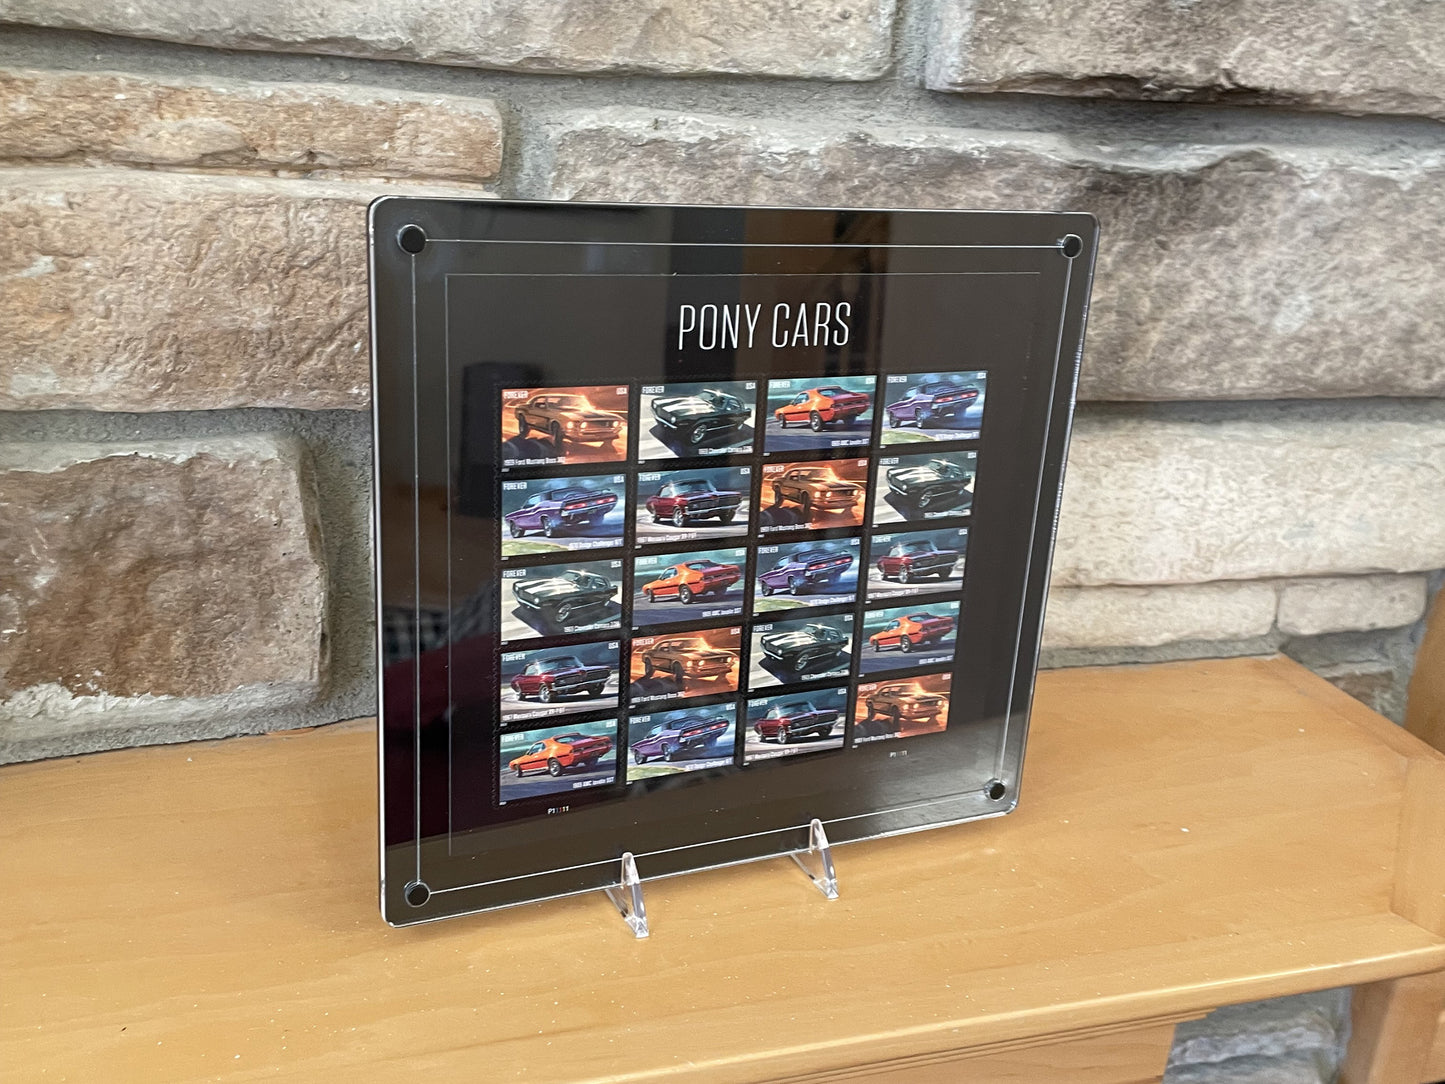 Display Frame For Pony Cars Stamp Sheet